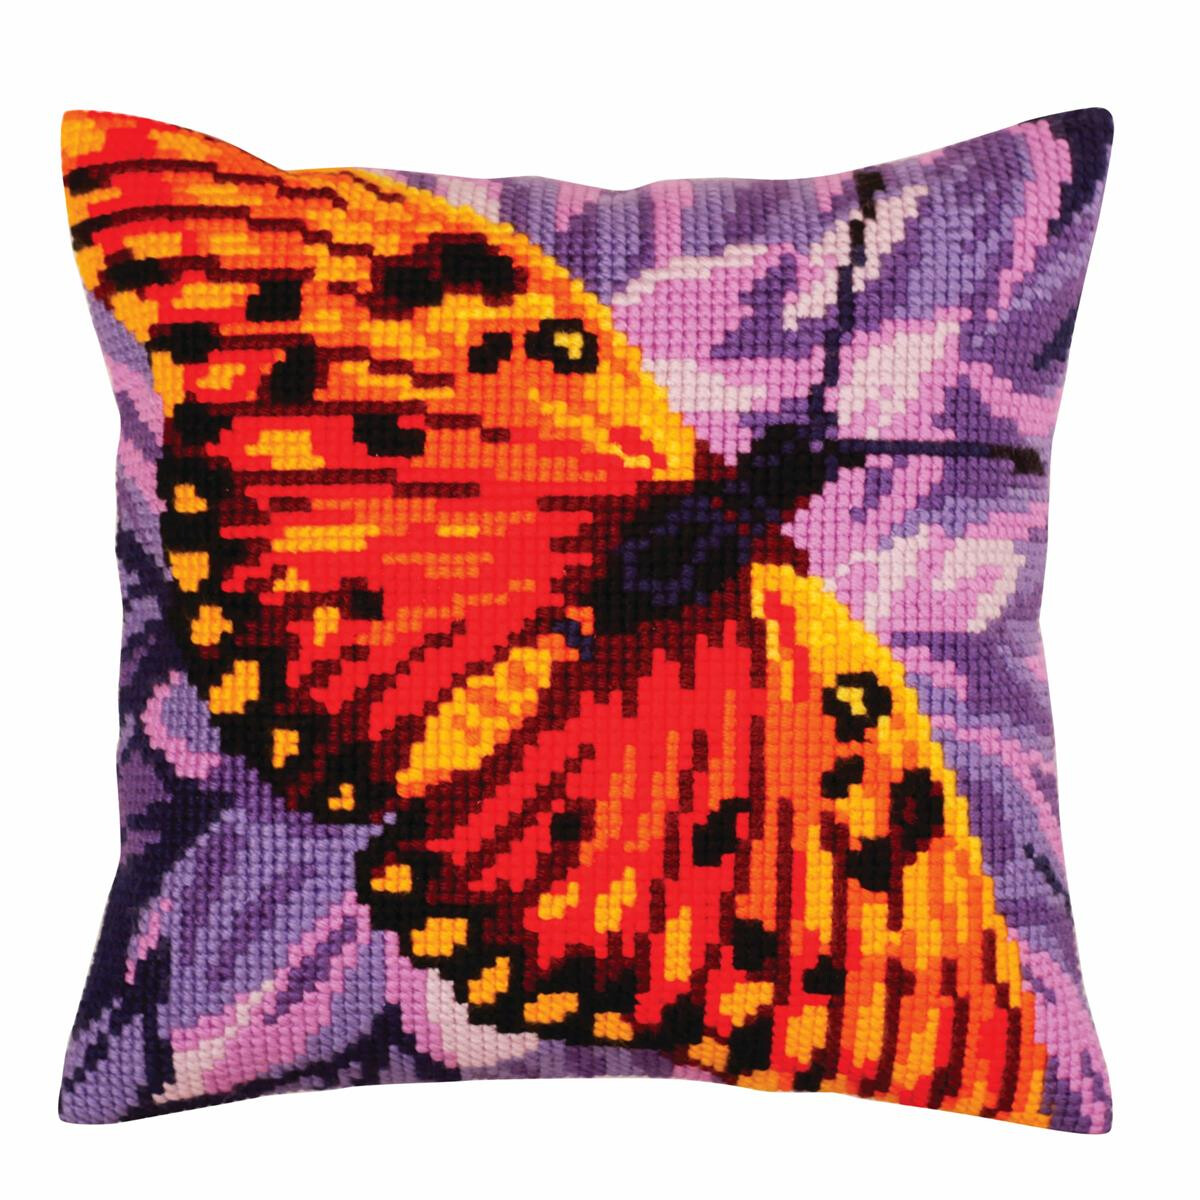 CdA stamped cross stitch kit cushion "Butterfly...